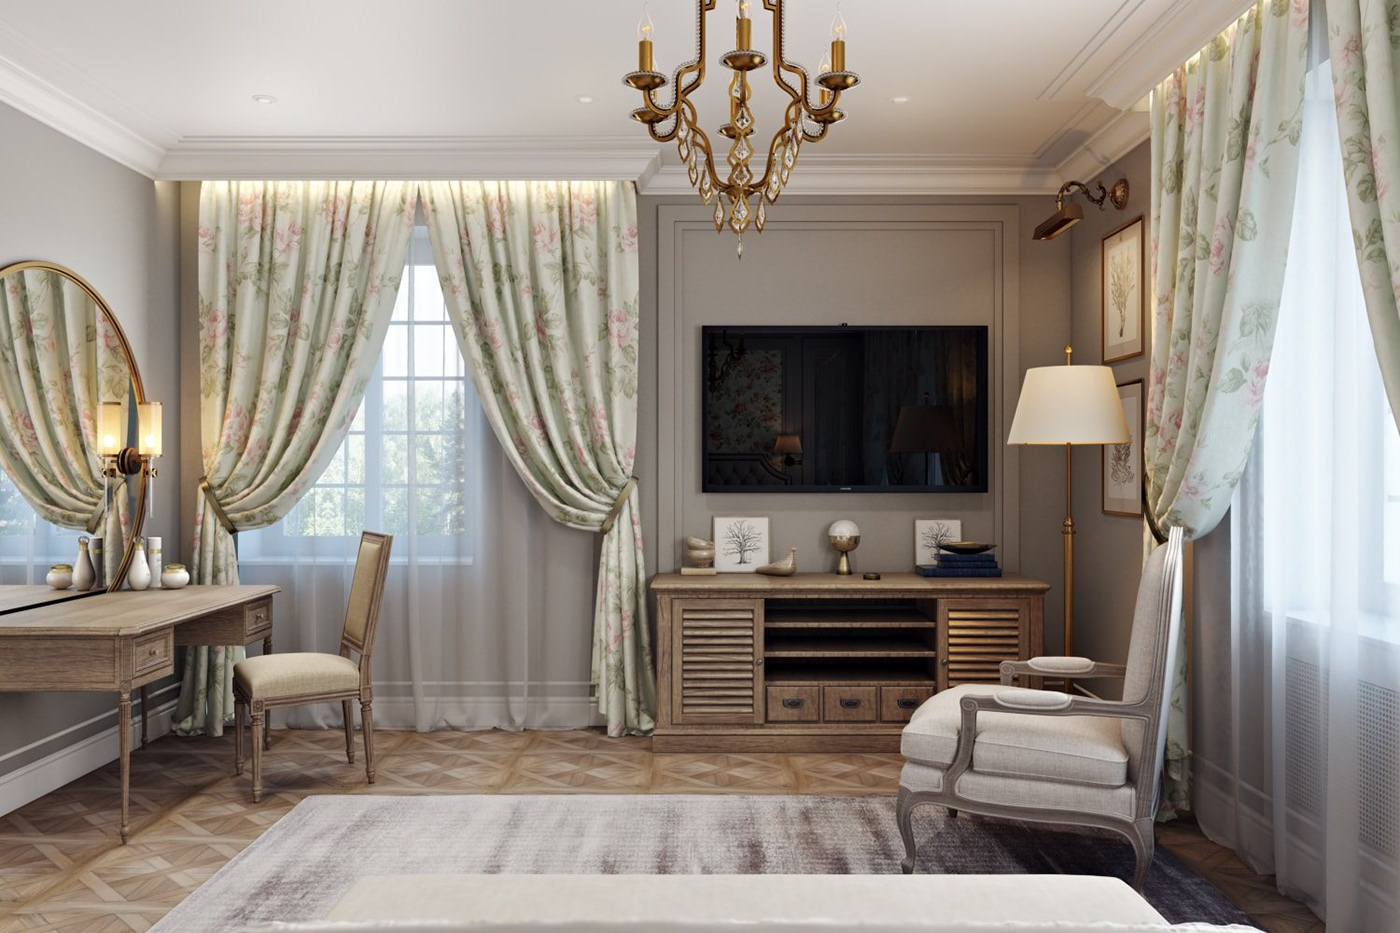 3dsmax 3D 3dvisualization Render 3drendering bedroom Interior design CGI cgstudio